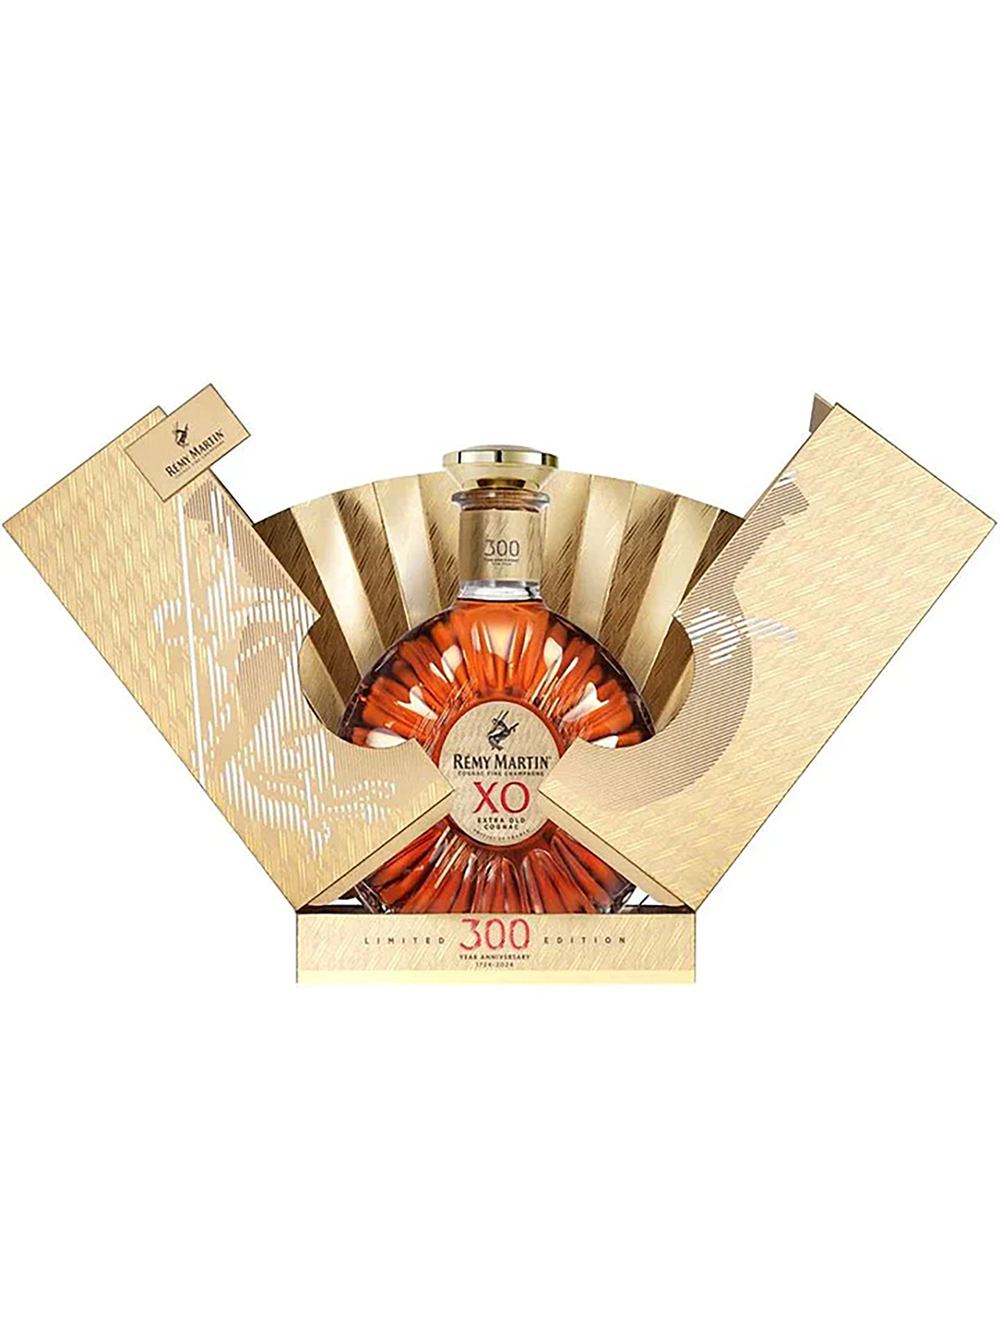 Remy Martin XO Majestic Momentum 300th Anniversary Edition Cognac 700ml - Kent Street Cellars